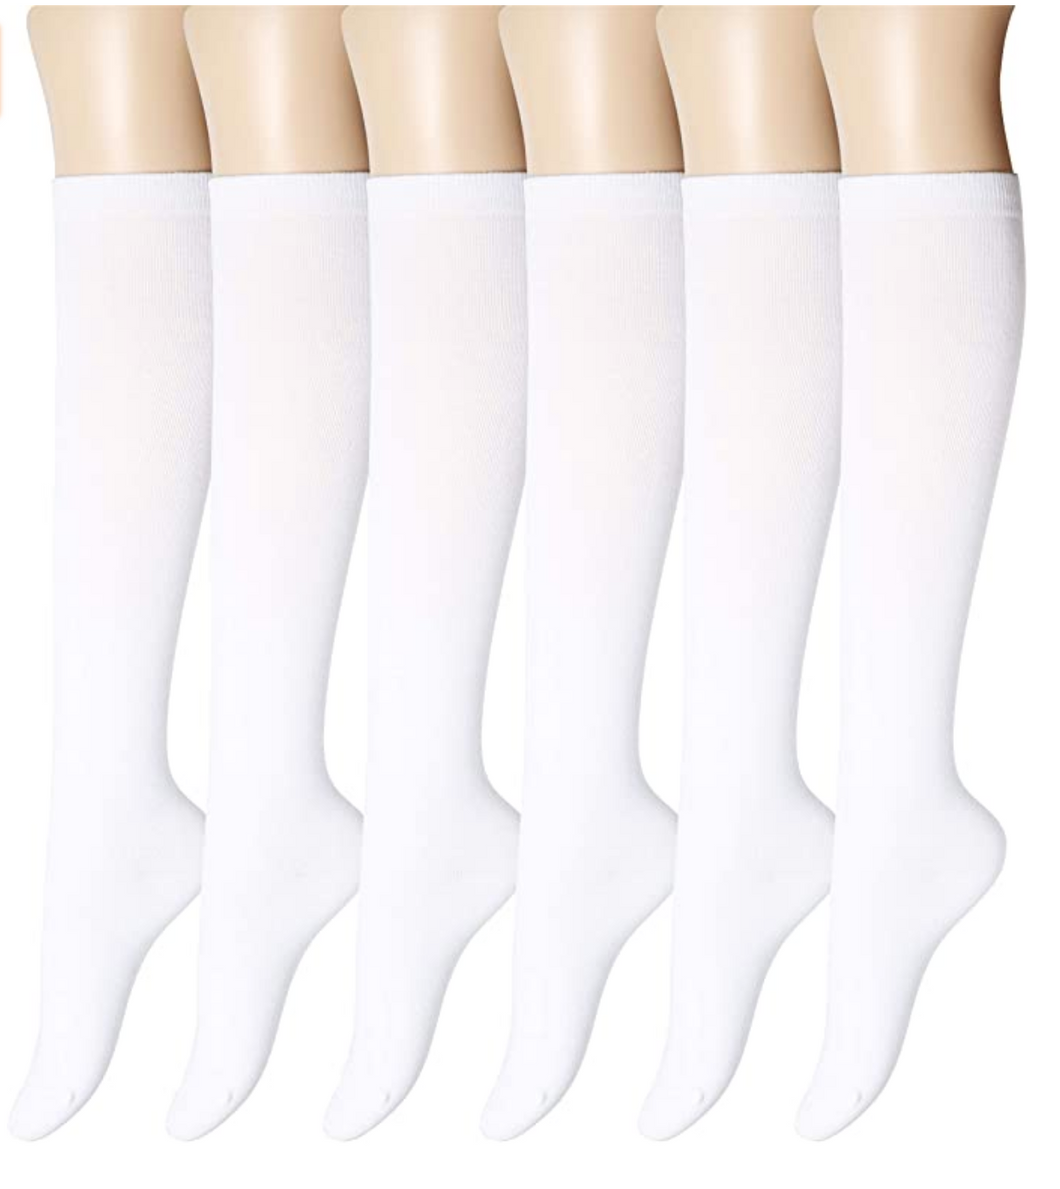 YEJIMONG Women's School Uniform / Team Sports / Tube Knee High Socks - White (6 Pairs / Size 5-9 / Cotton)